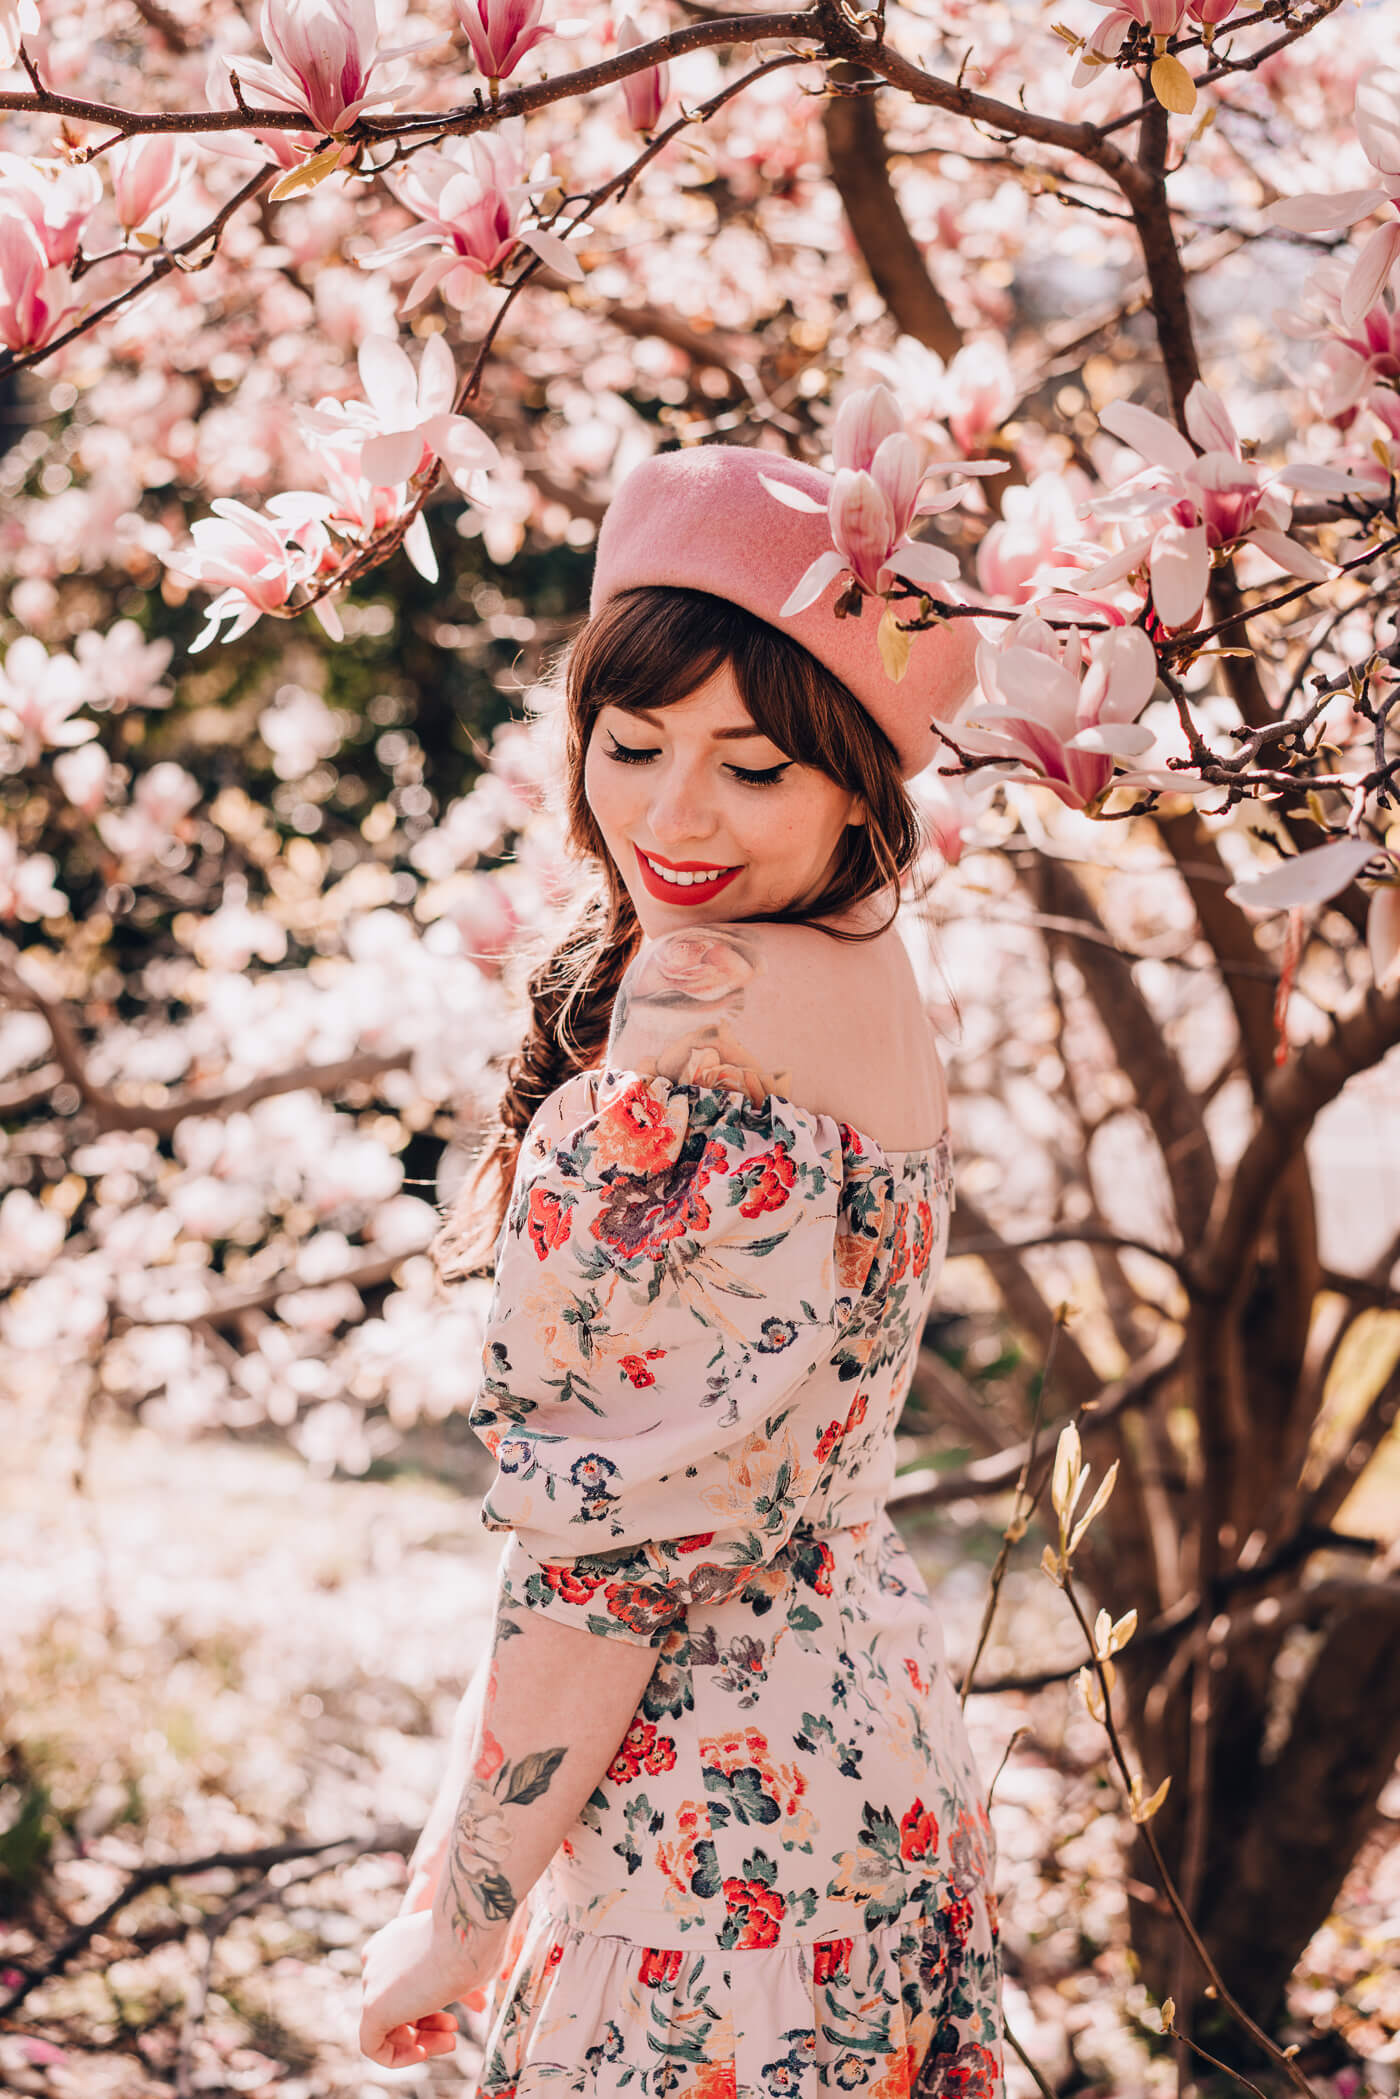 rebecca taylor dress, summer floral dress 2018